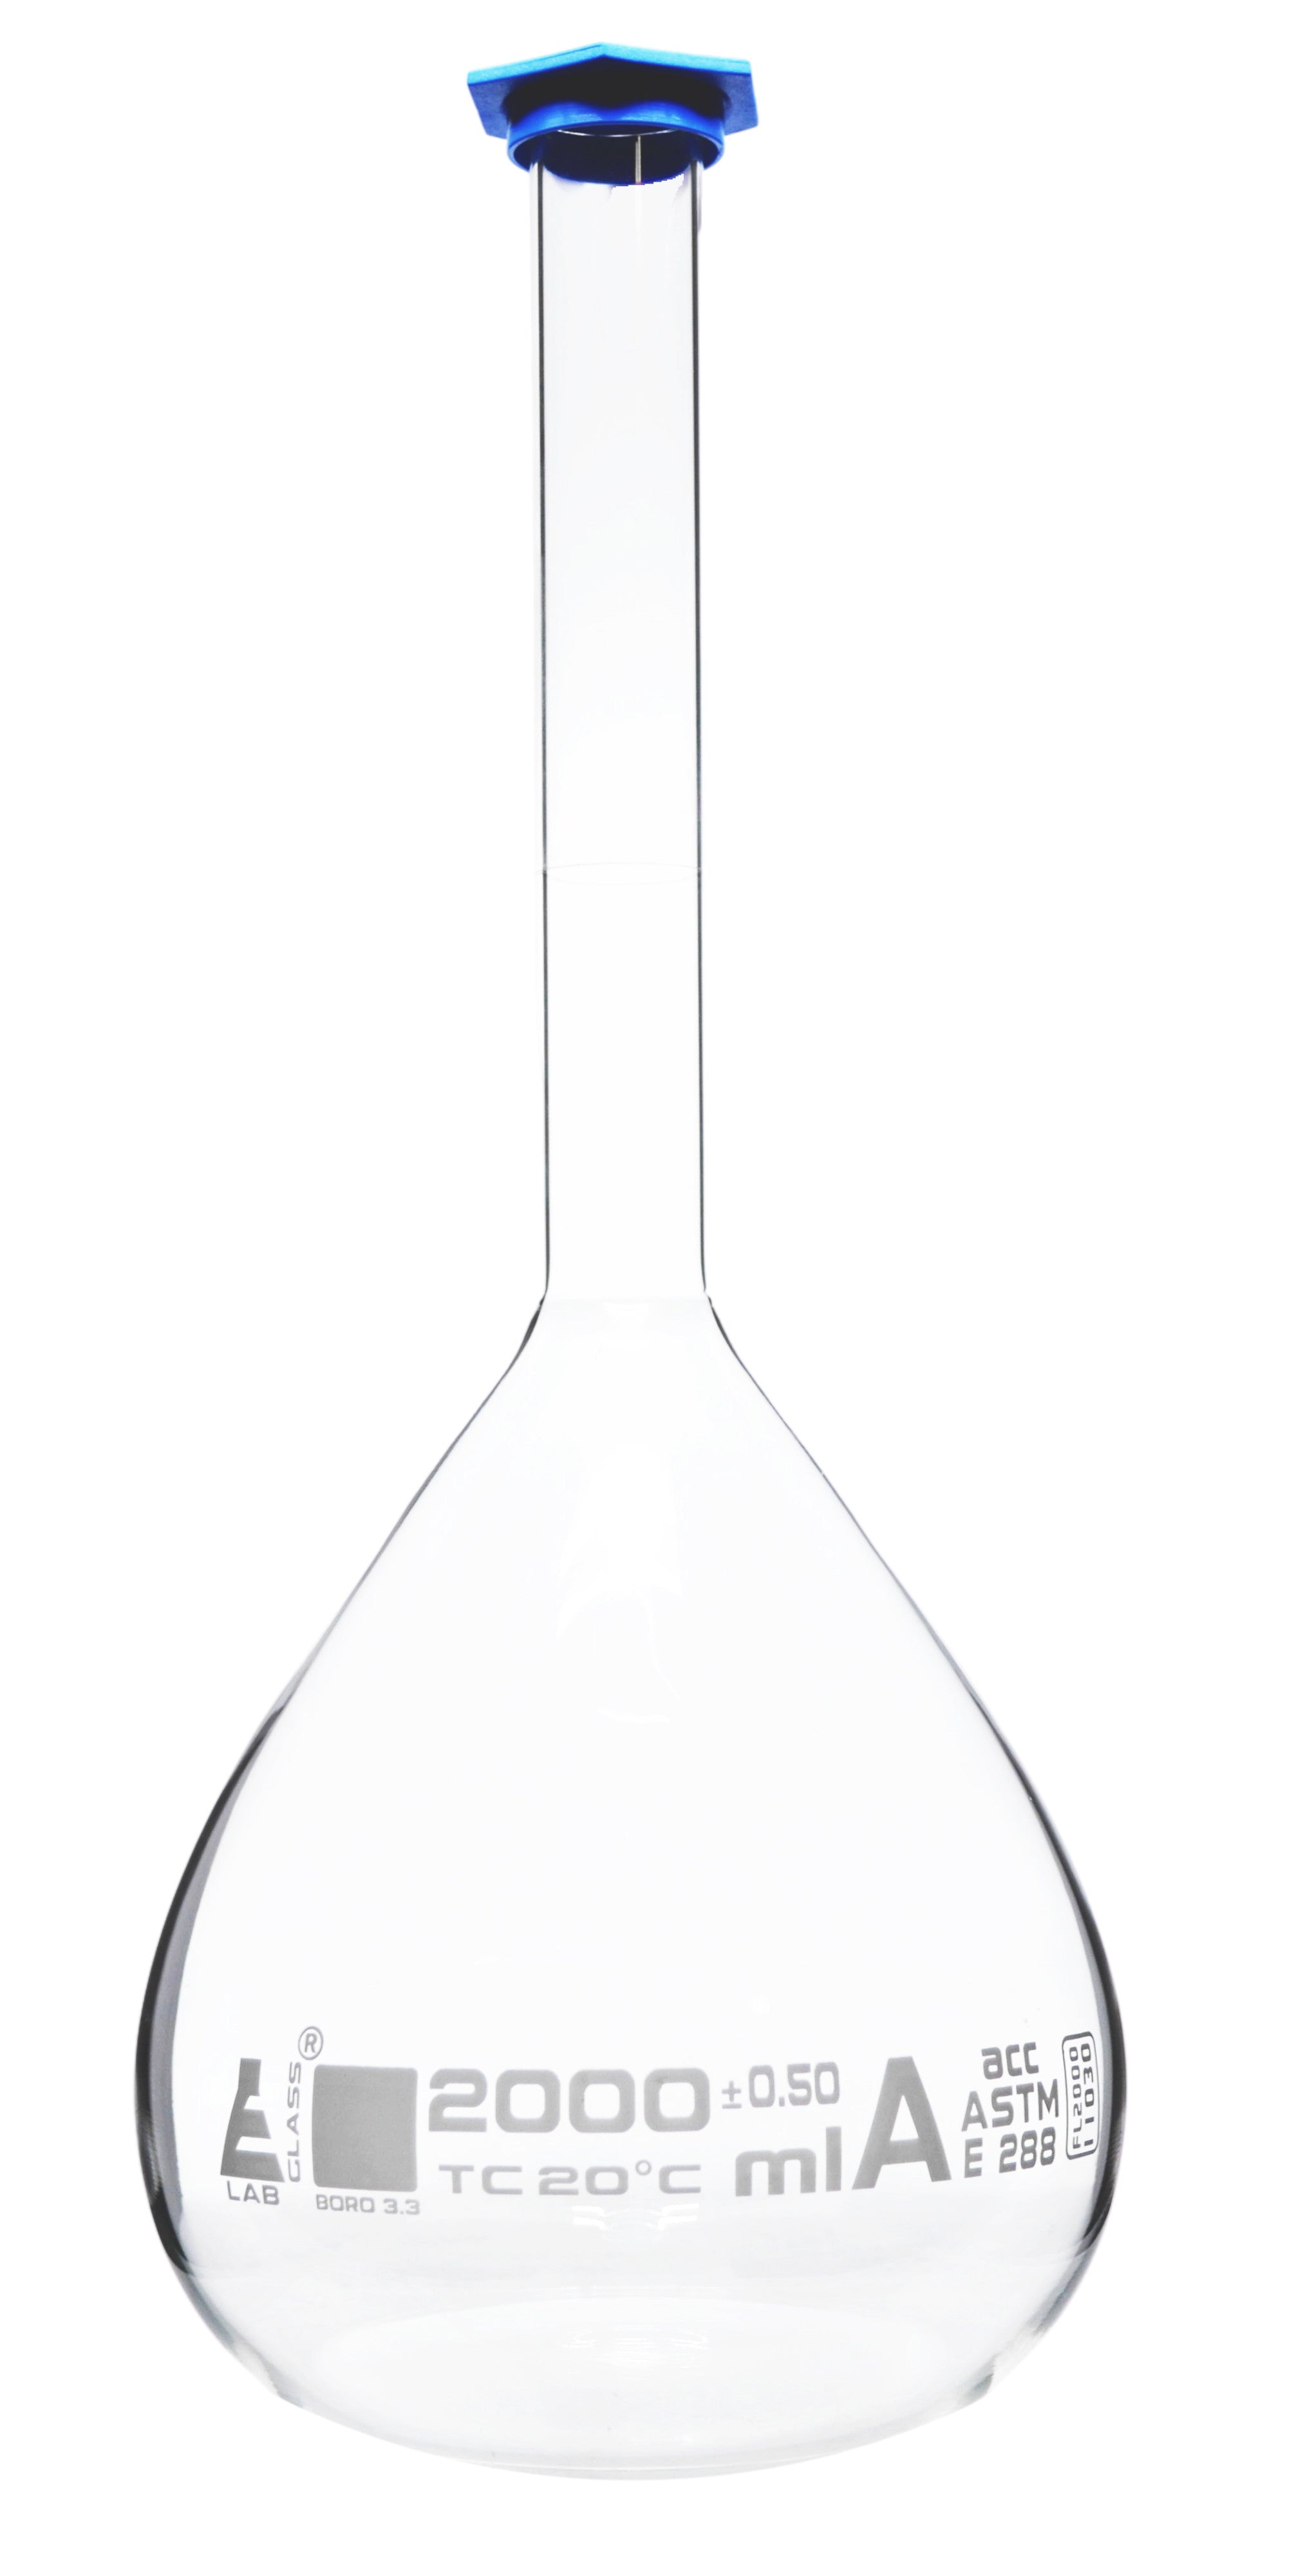 Borosilicate Volumetric Flask with Polyethylene Snap Cap, 2000 ml, Class A, White Print, ASTM, Autoclavable